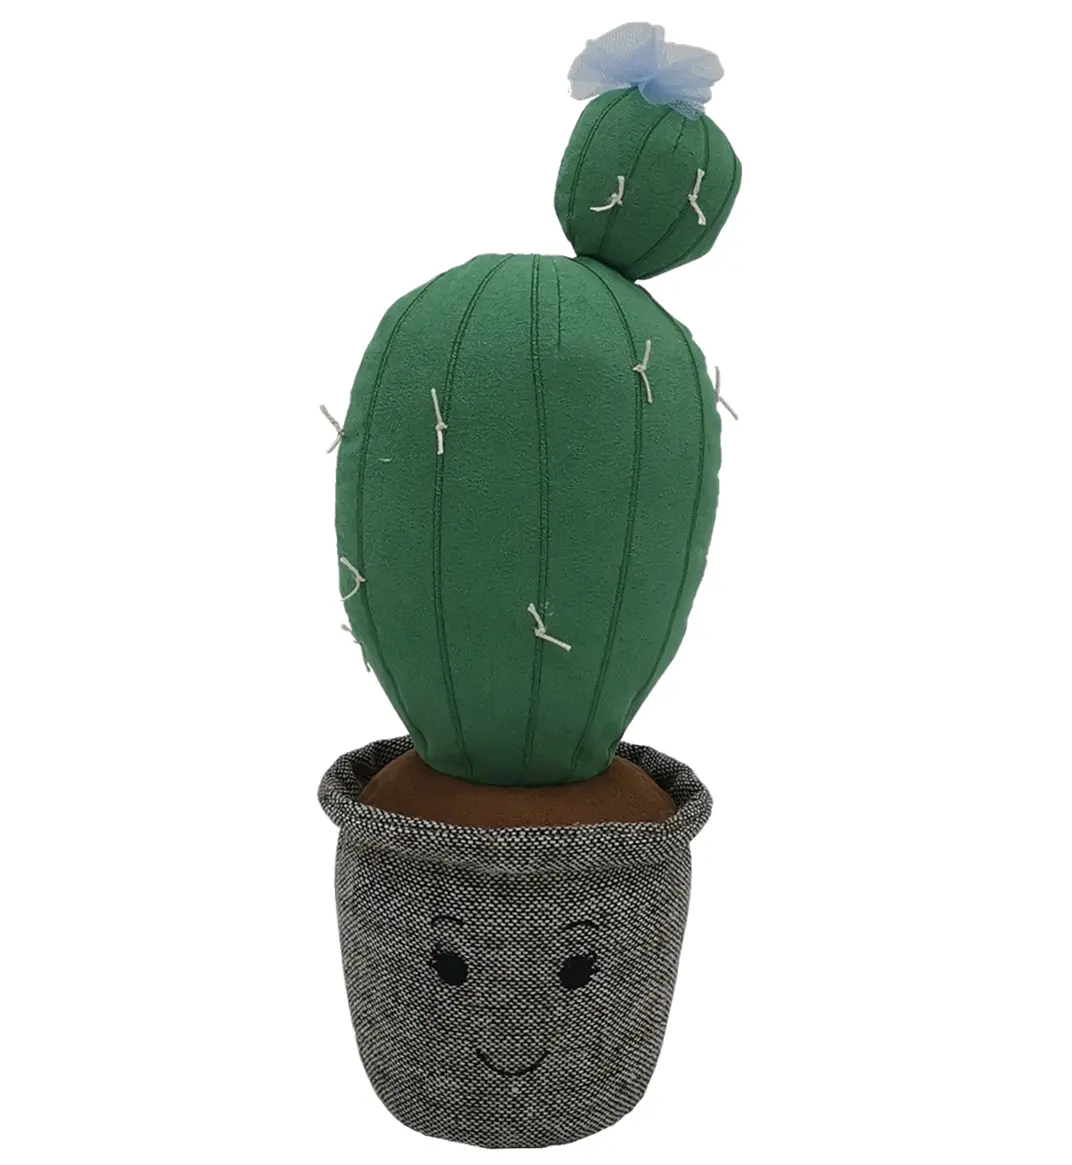 Factory Wholesale 27cm Plush Lifelike Simulation Creative Green Potted Plant cactus Soft Plush Toys Doll